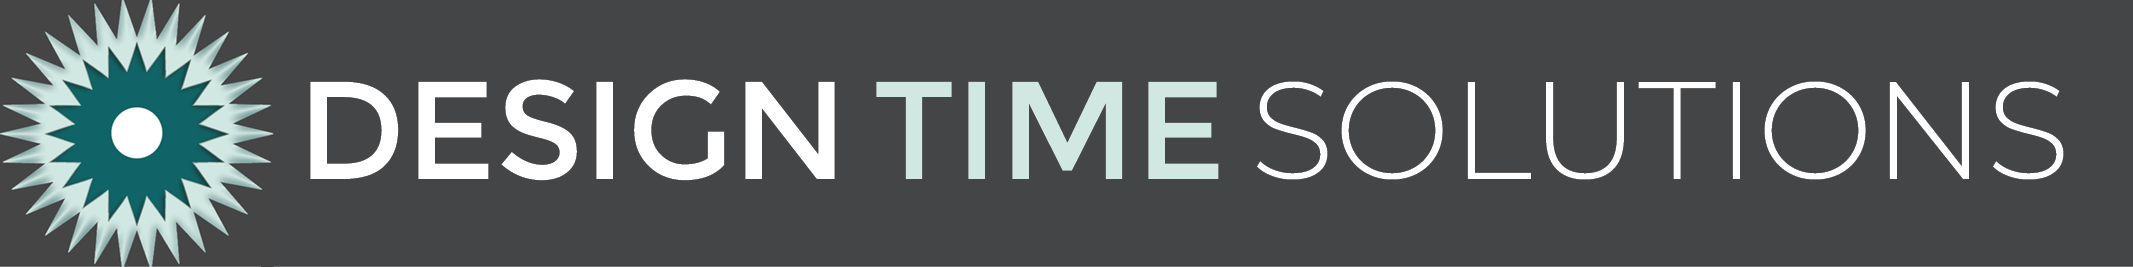 Design Time Solutions logo